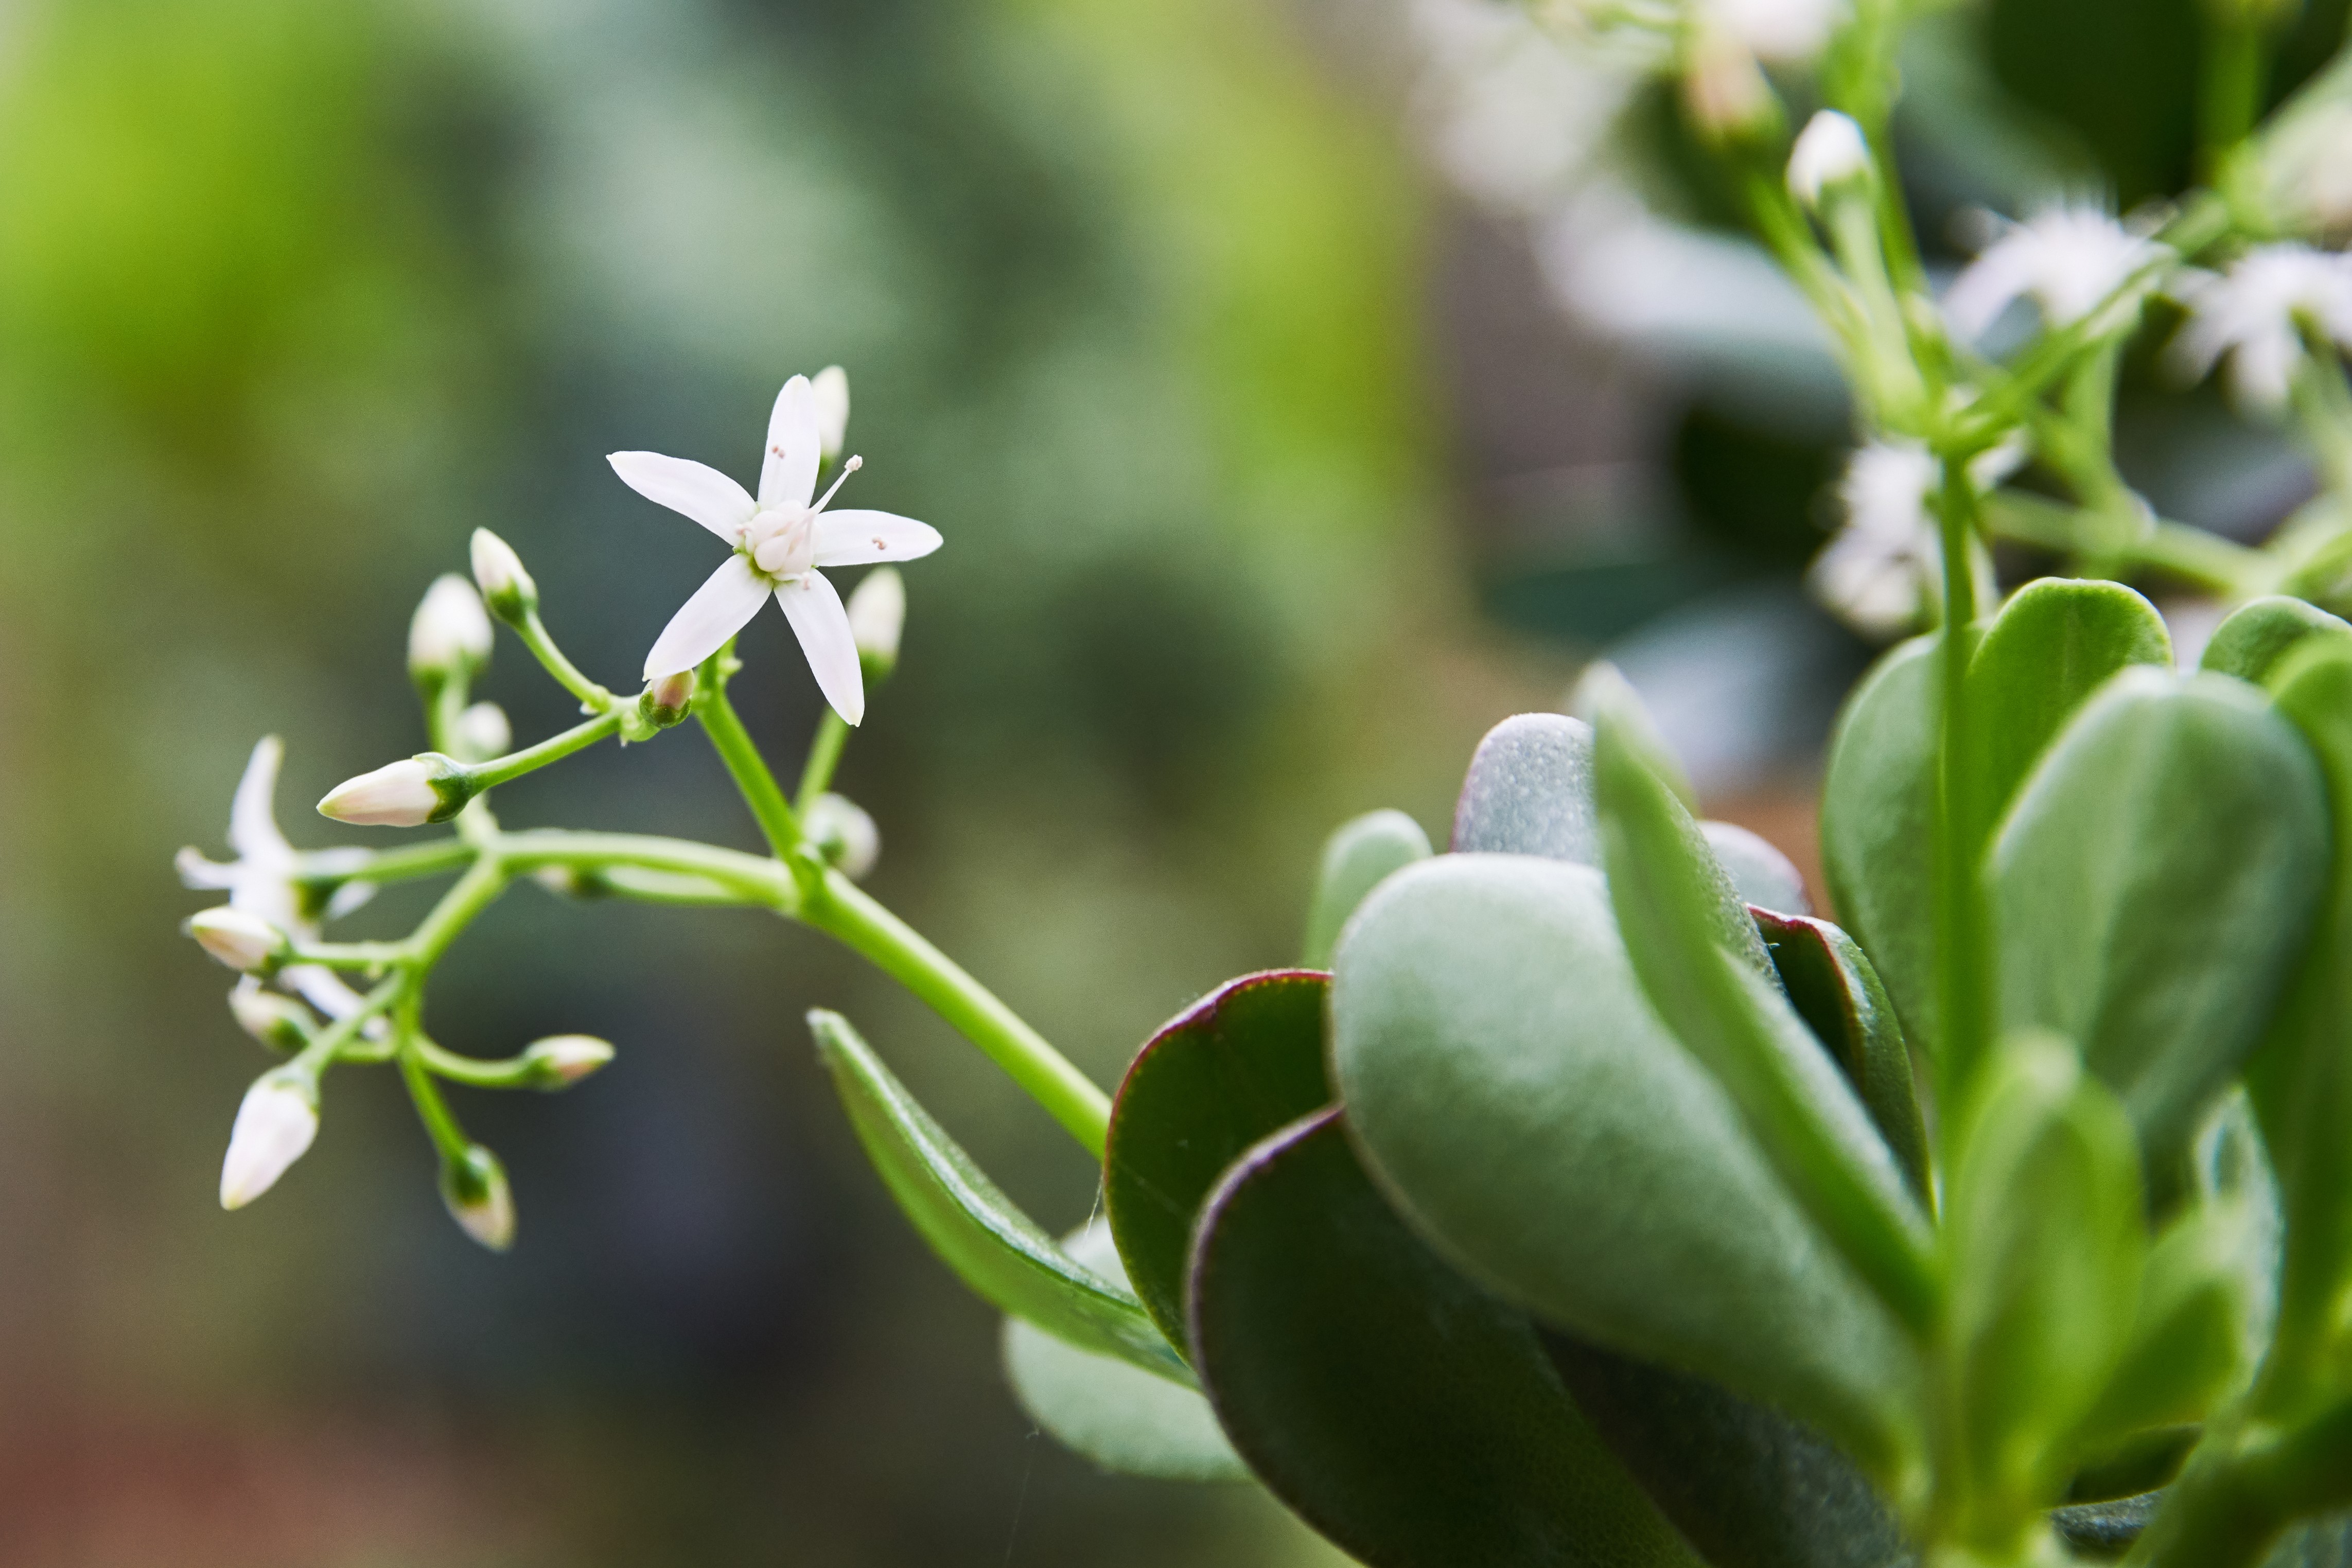 Planta Jade: uma suculenta versátil e fácil de cuidar (Foto: Getty Images/EyeEm)